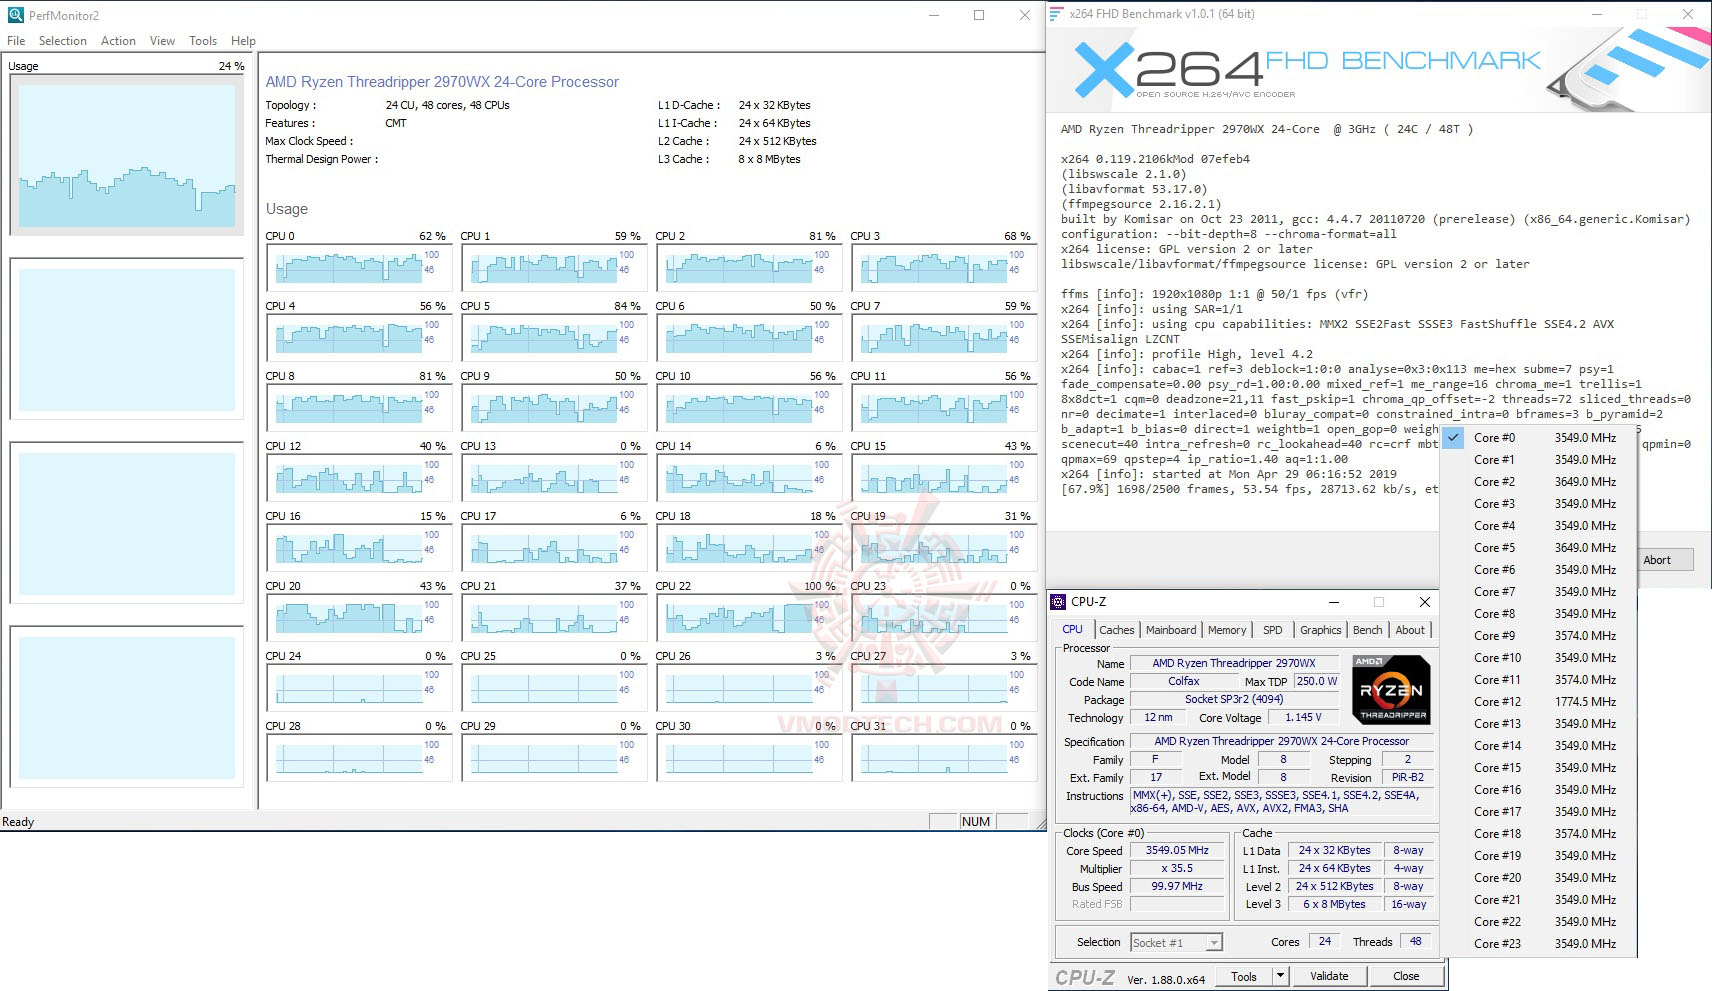 x264 x AMD RYZEN THREADRIPPER 2970WX PROCESSOR REVIEW